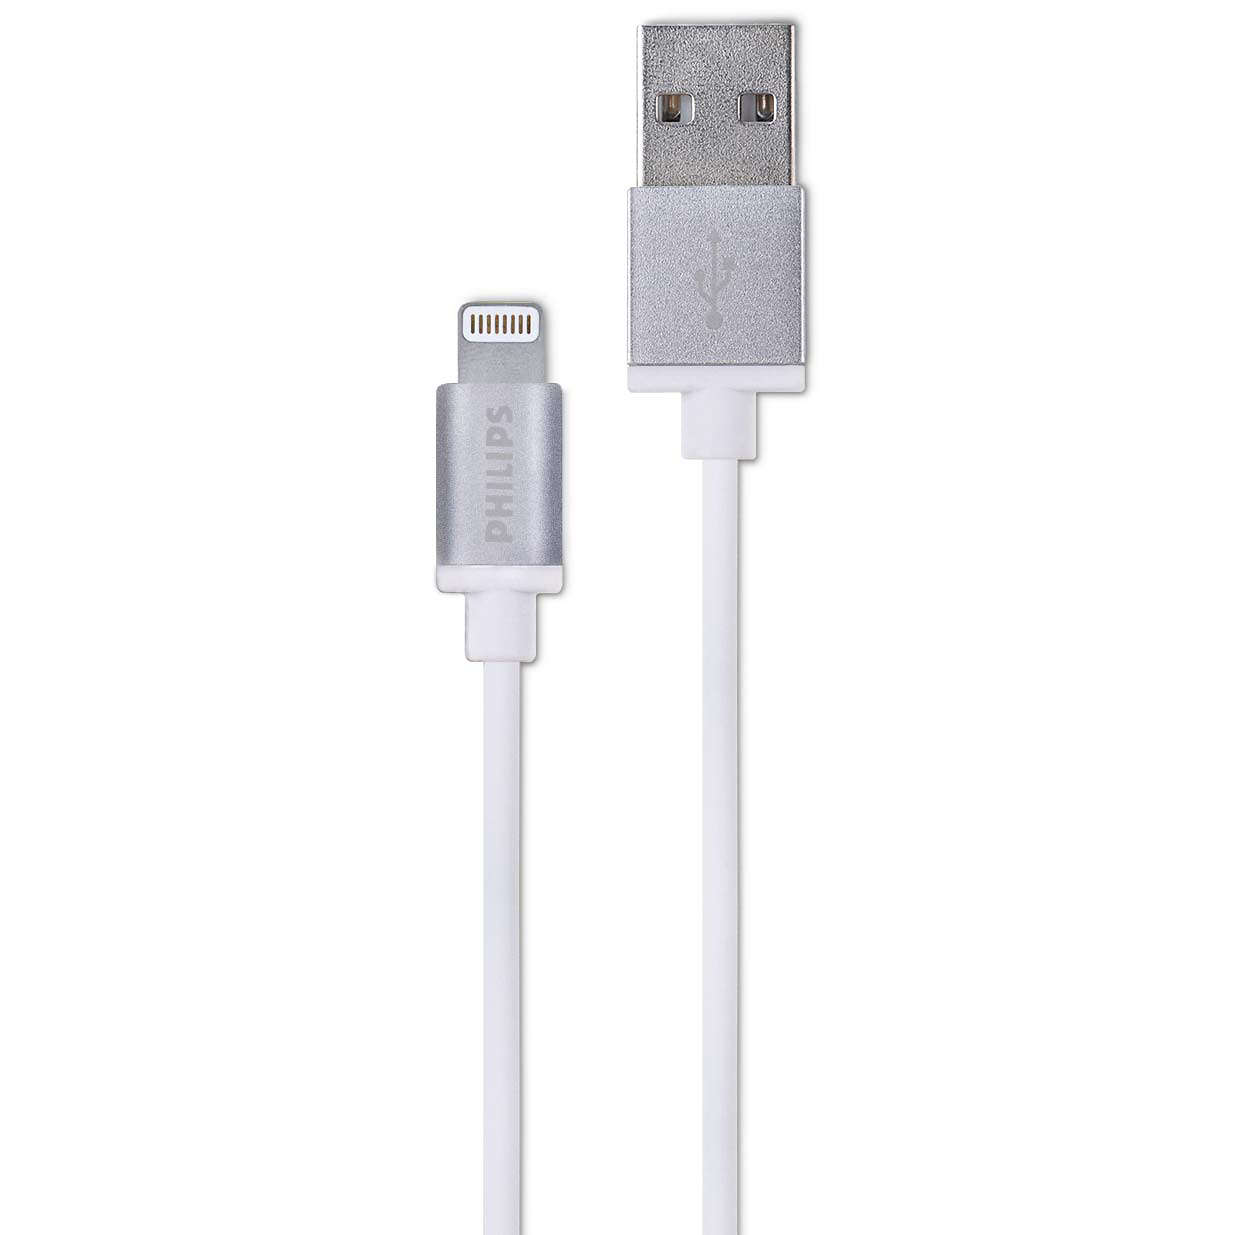 Cable de Lightning a USB de 1.2 m para iPhone